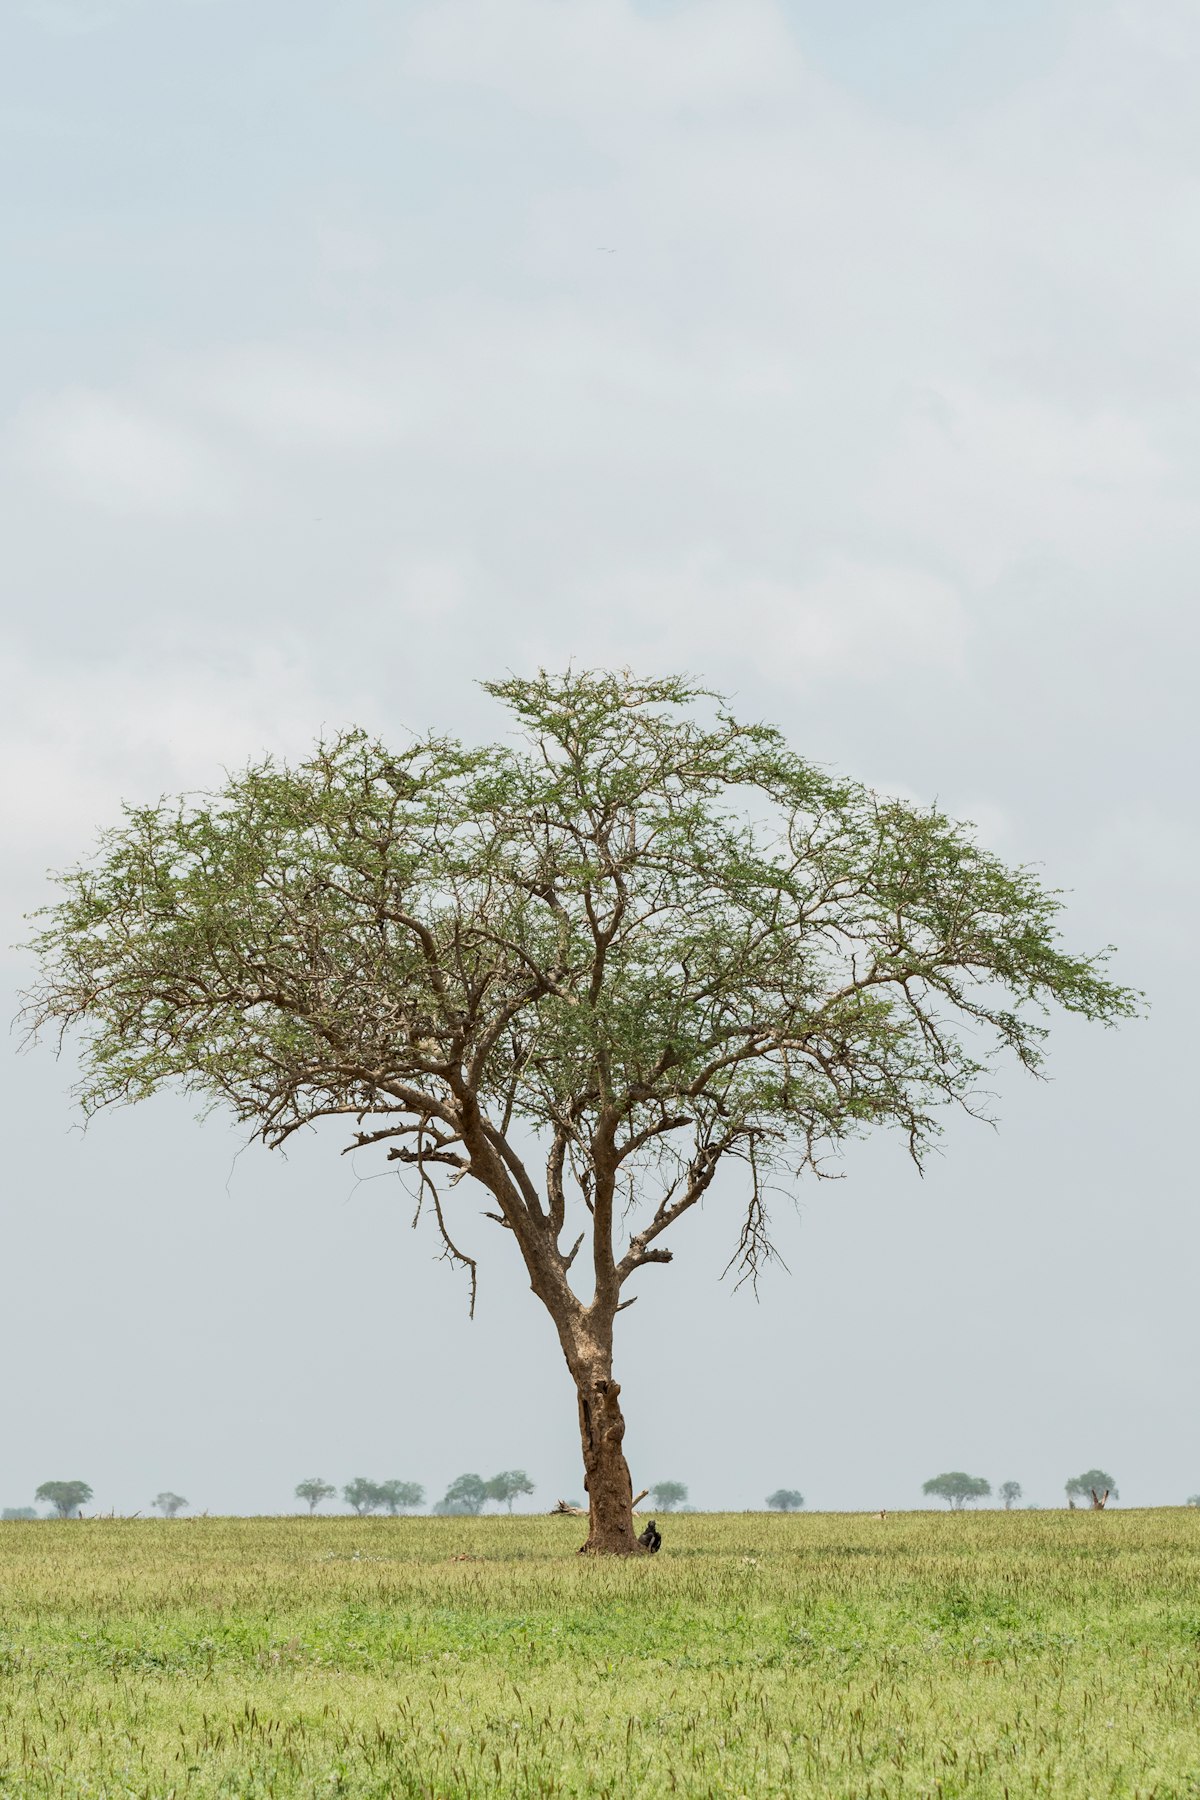 An amazing tree